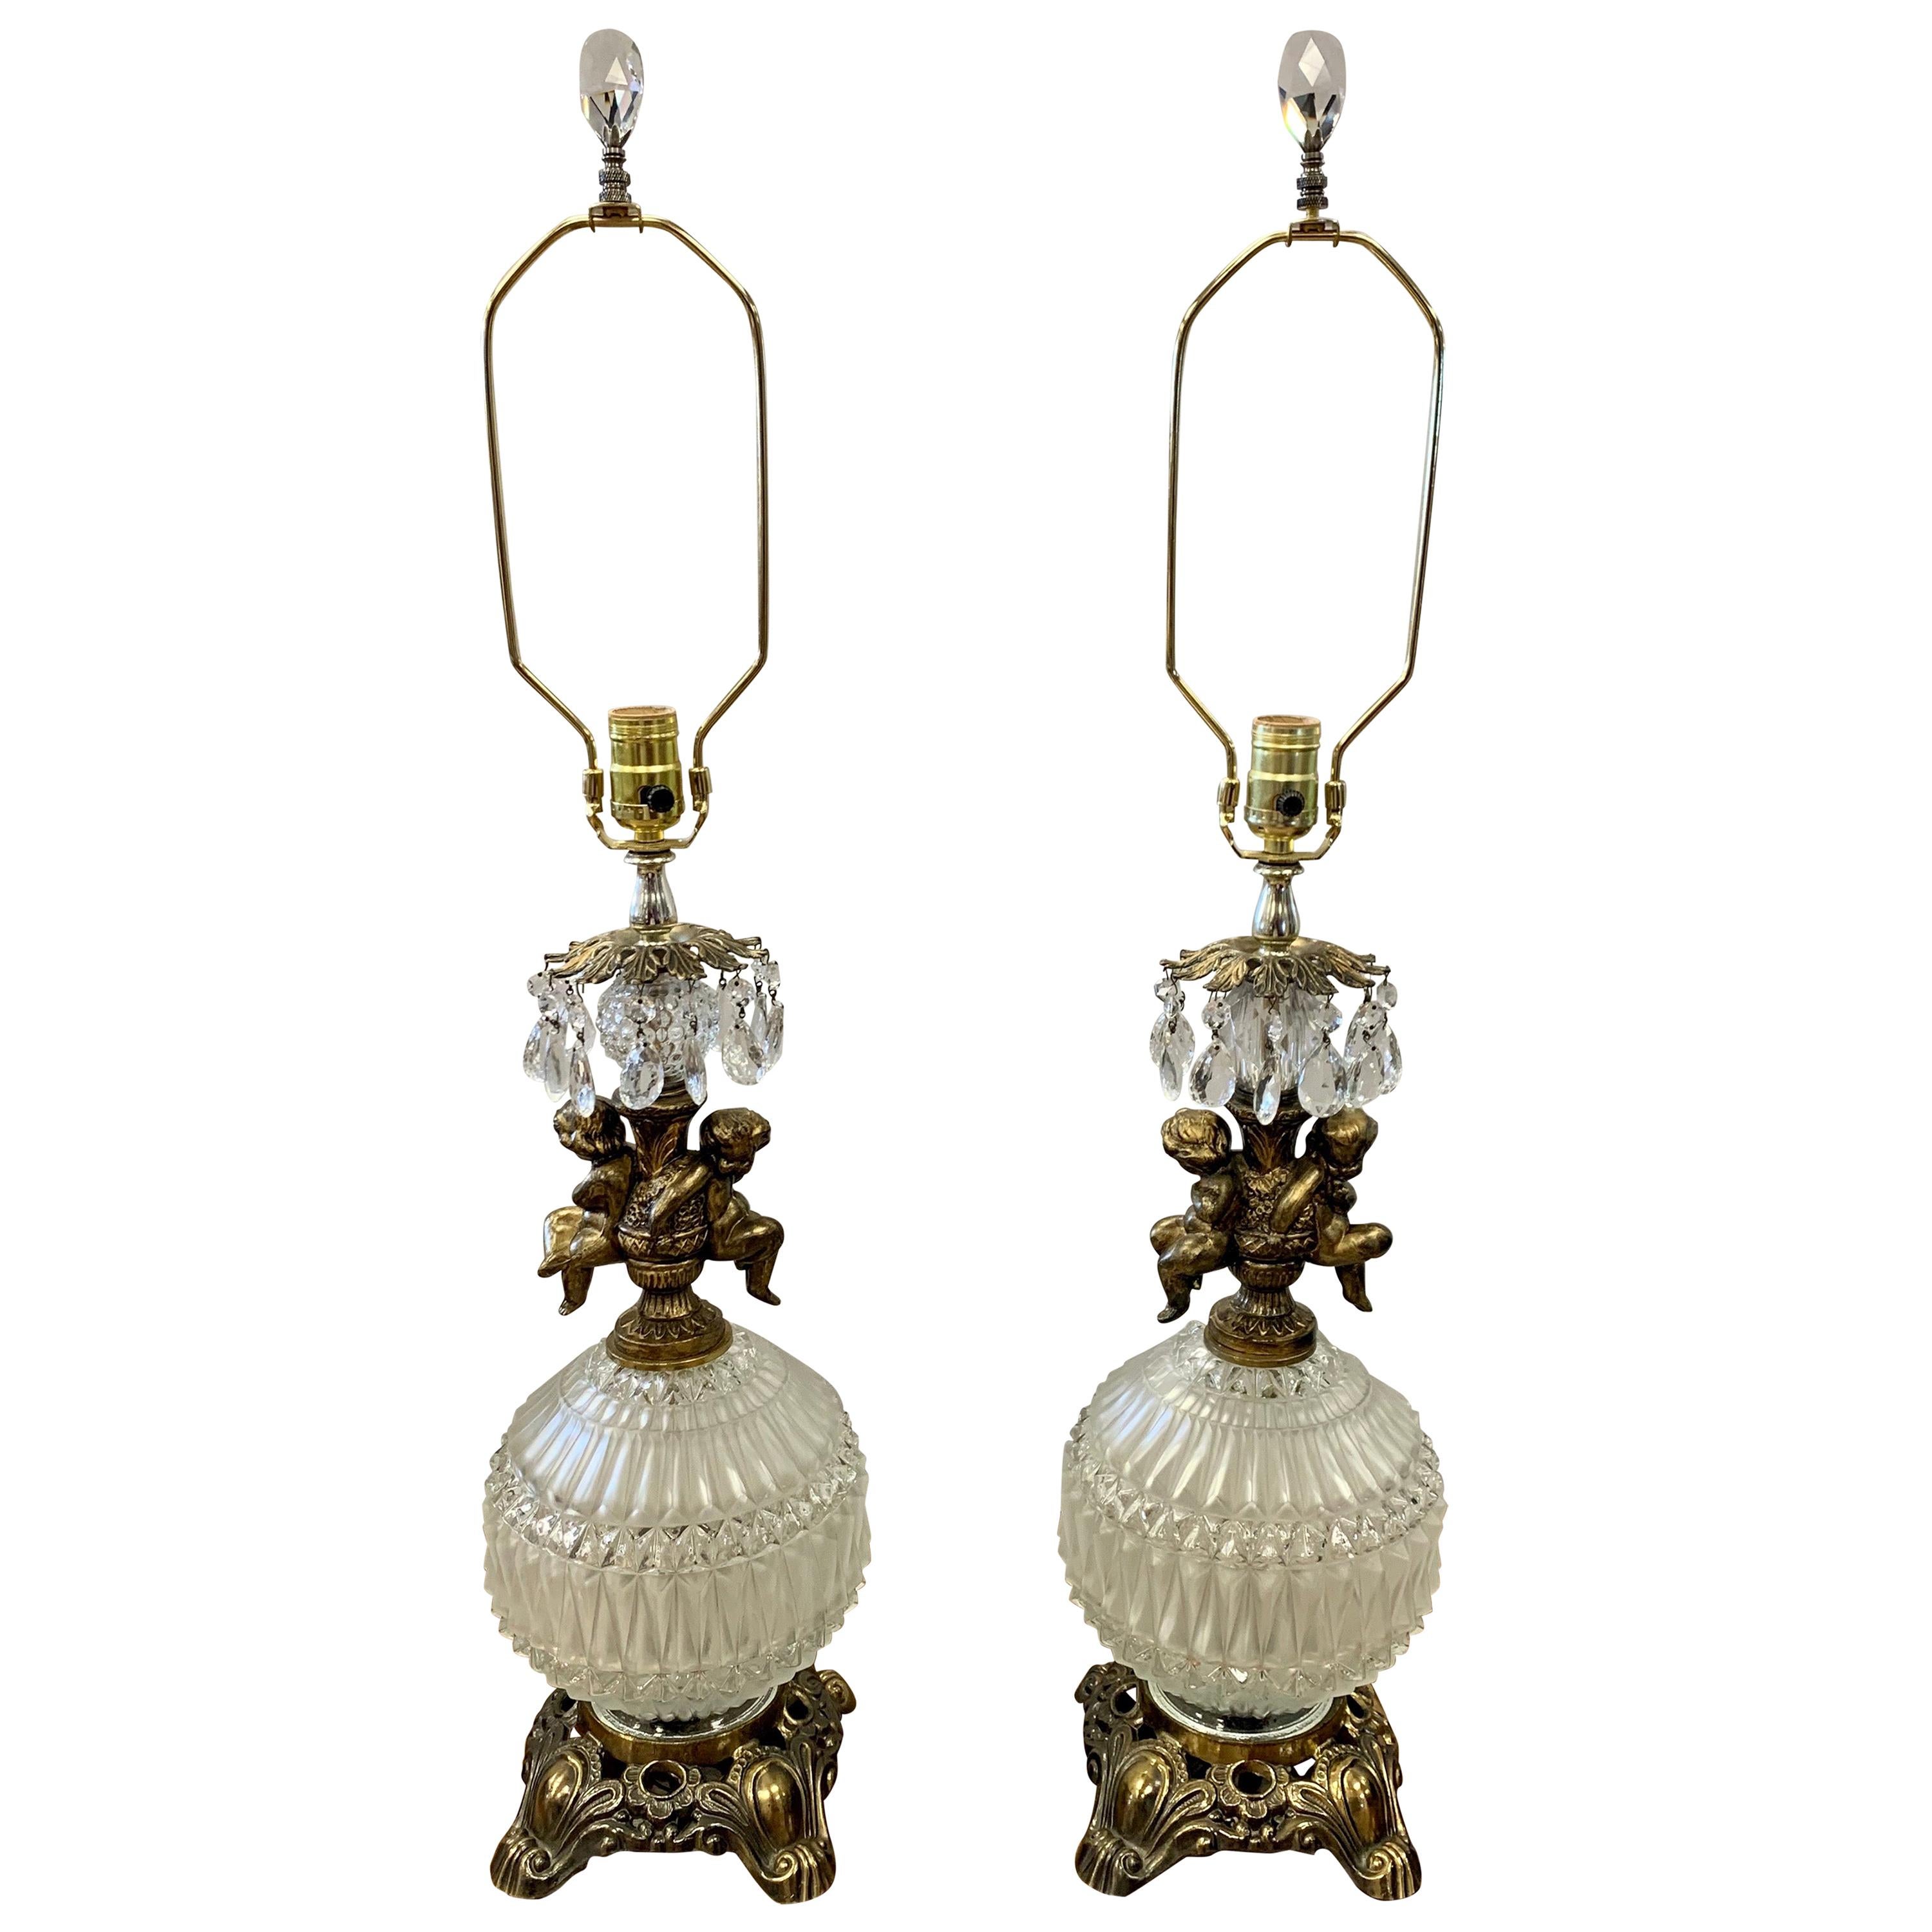 Hollywood Regency Vintage Round Crystal with Cherubs Table Lamps, Pair